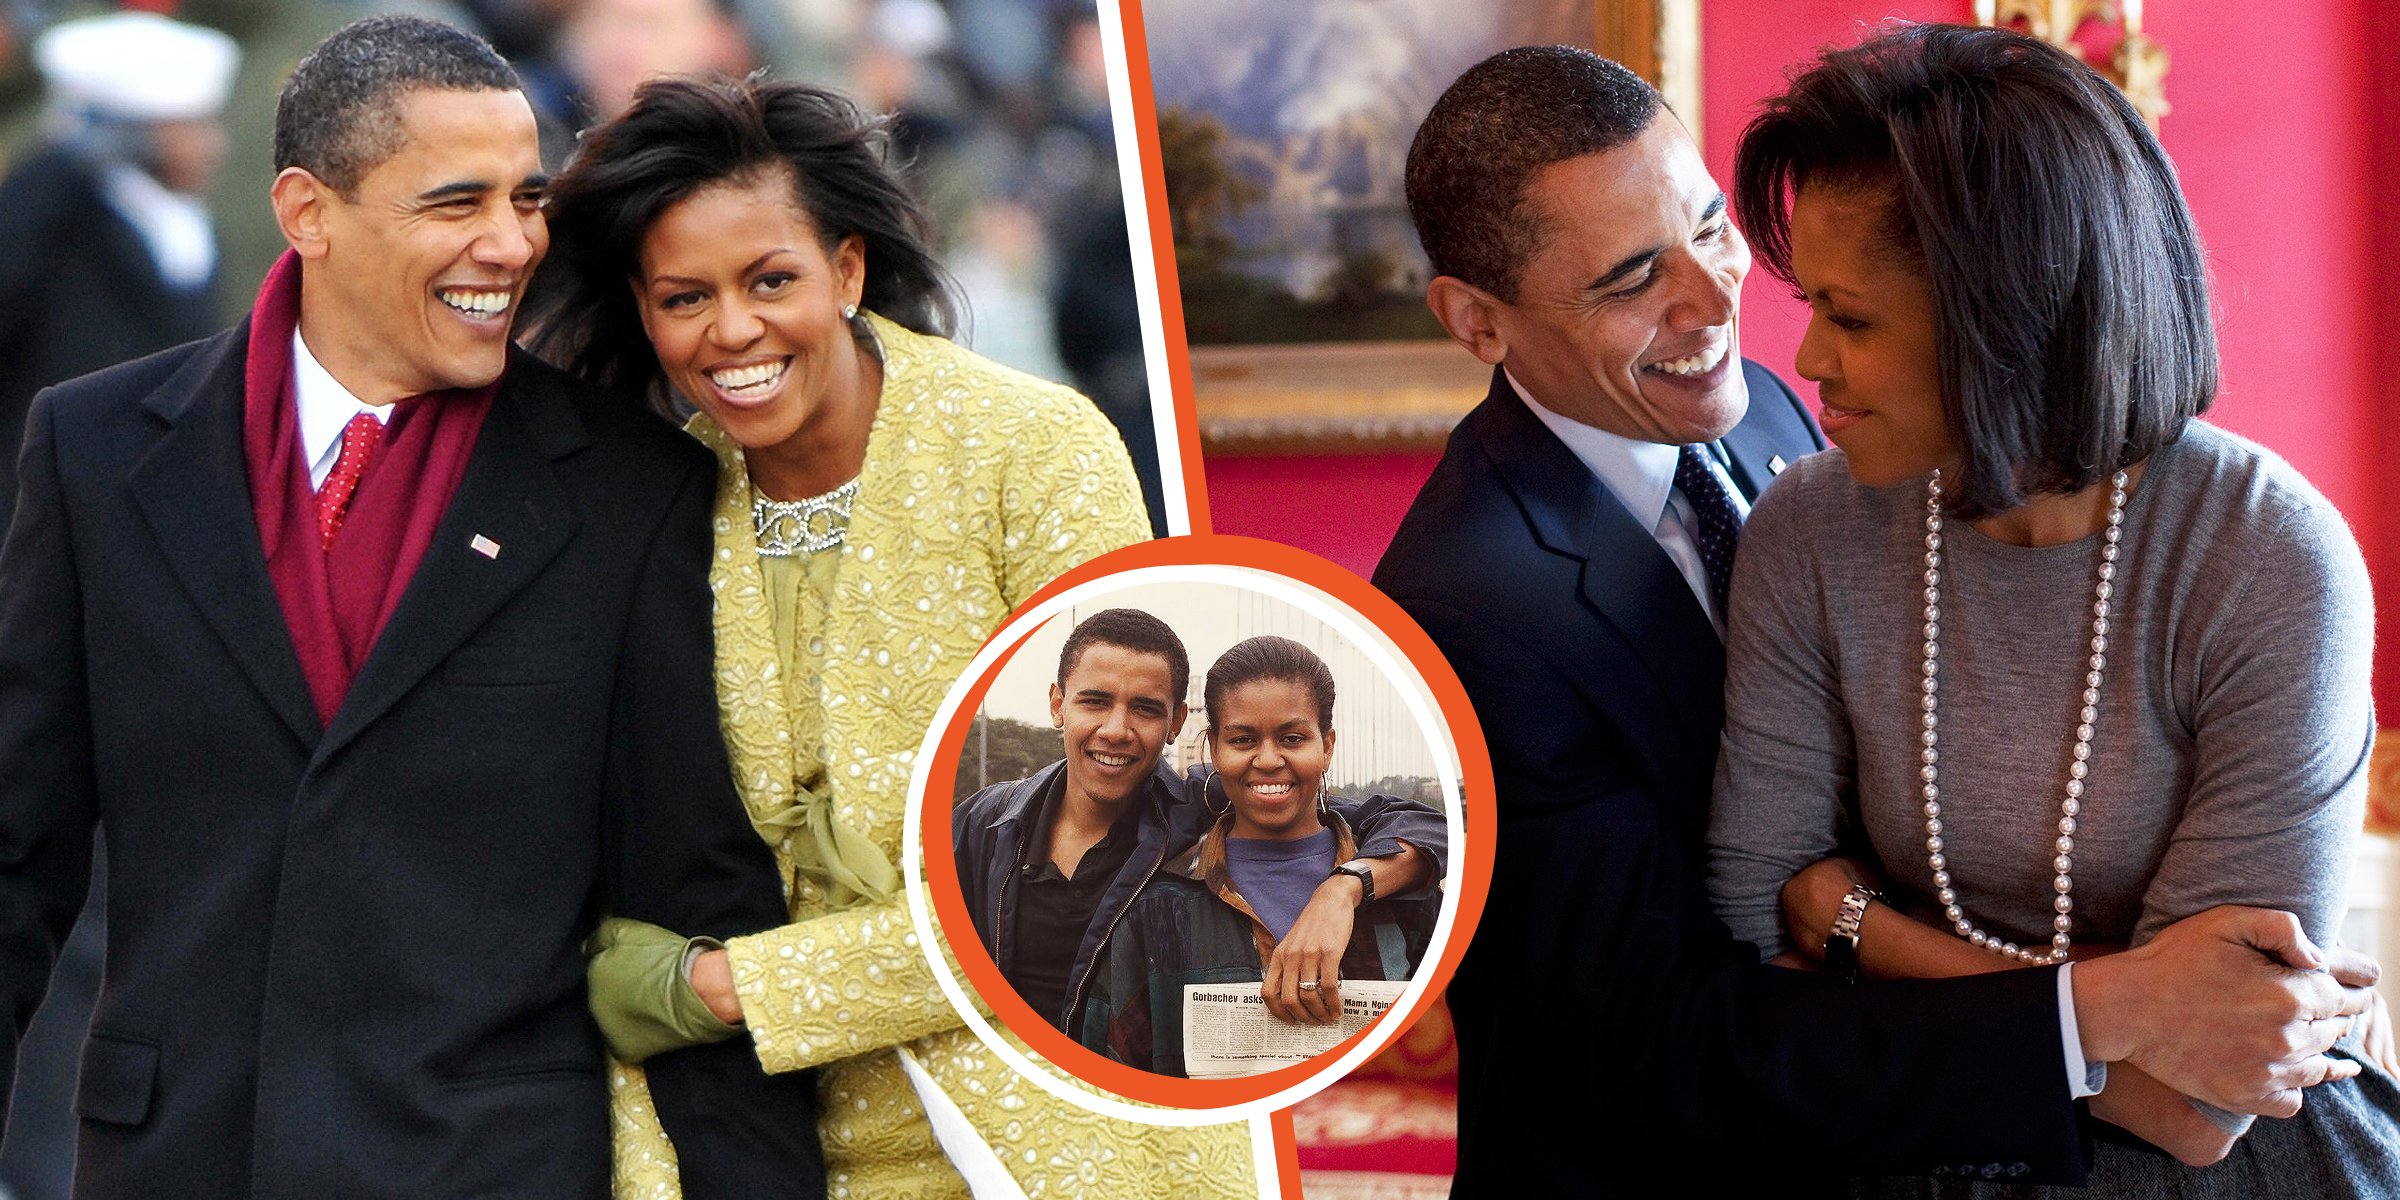 Michelle und Barack Obama | Quelle: Getty Images instagram.com/barackobama